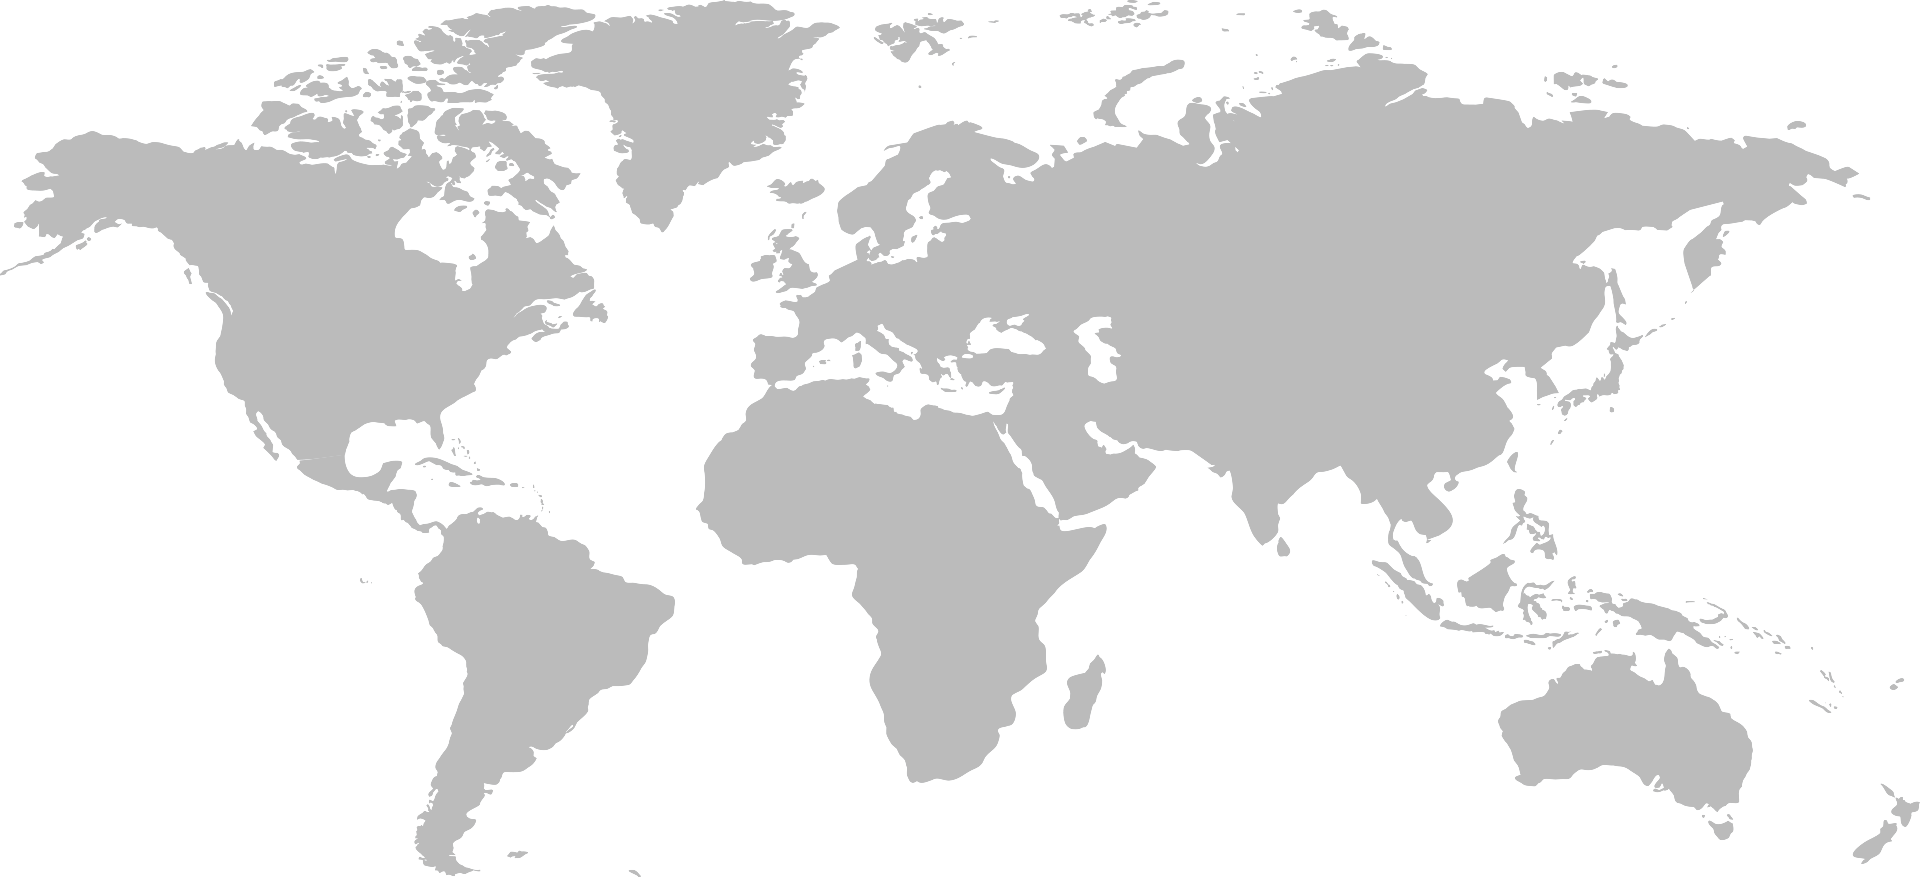 Overseas company map